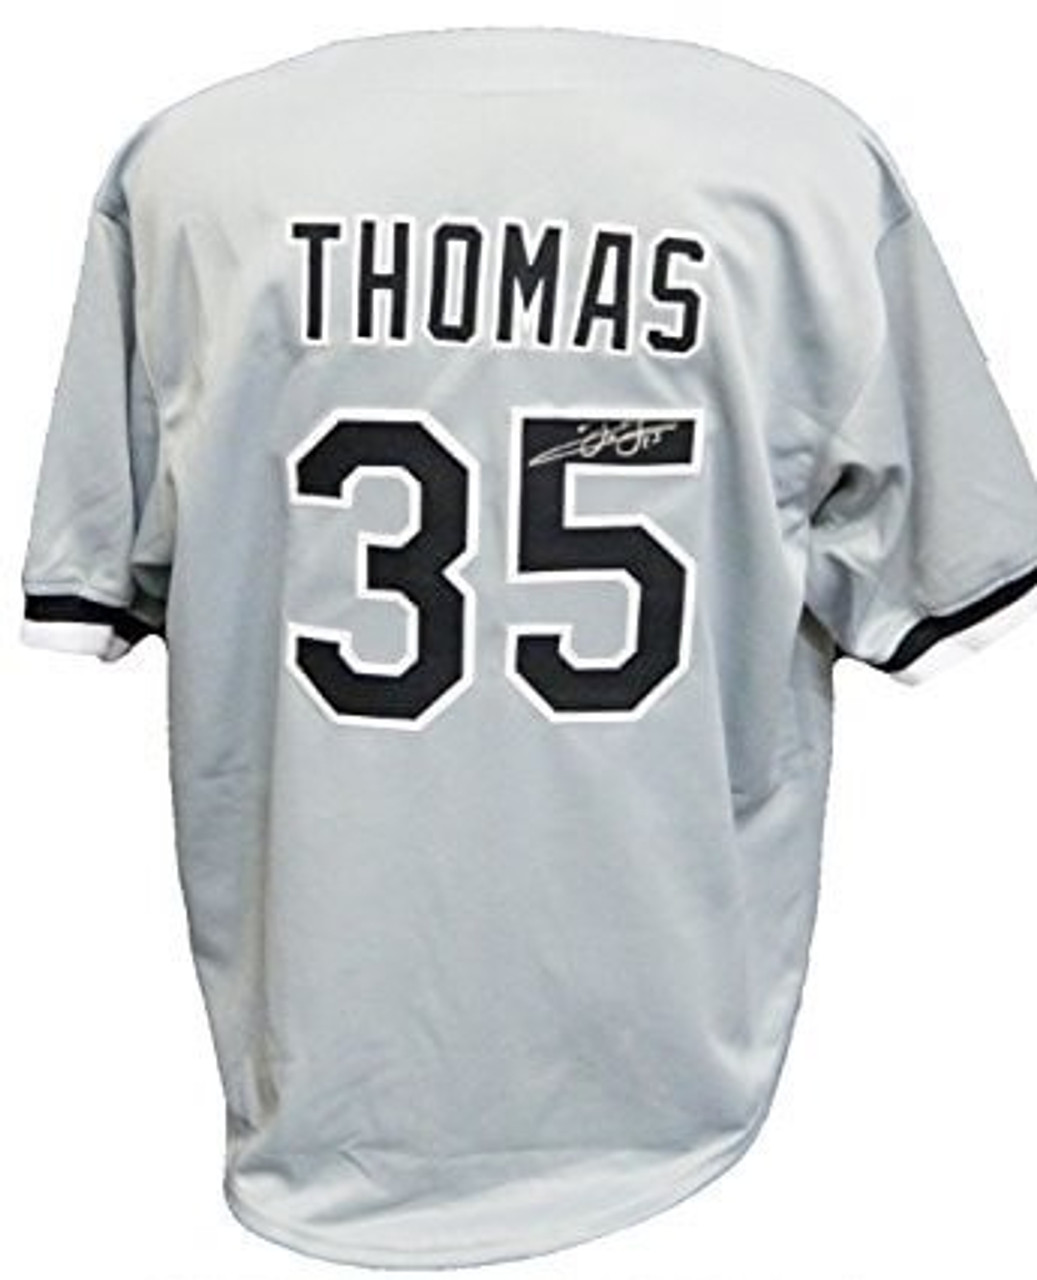 Frank Thomas Signed White Sox Full-Size Batting Helmet (Schwartz)